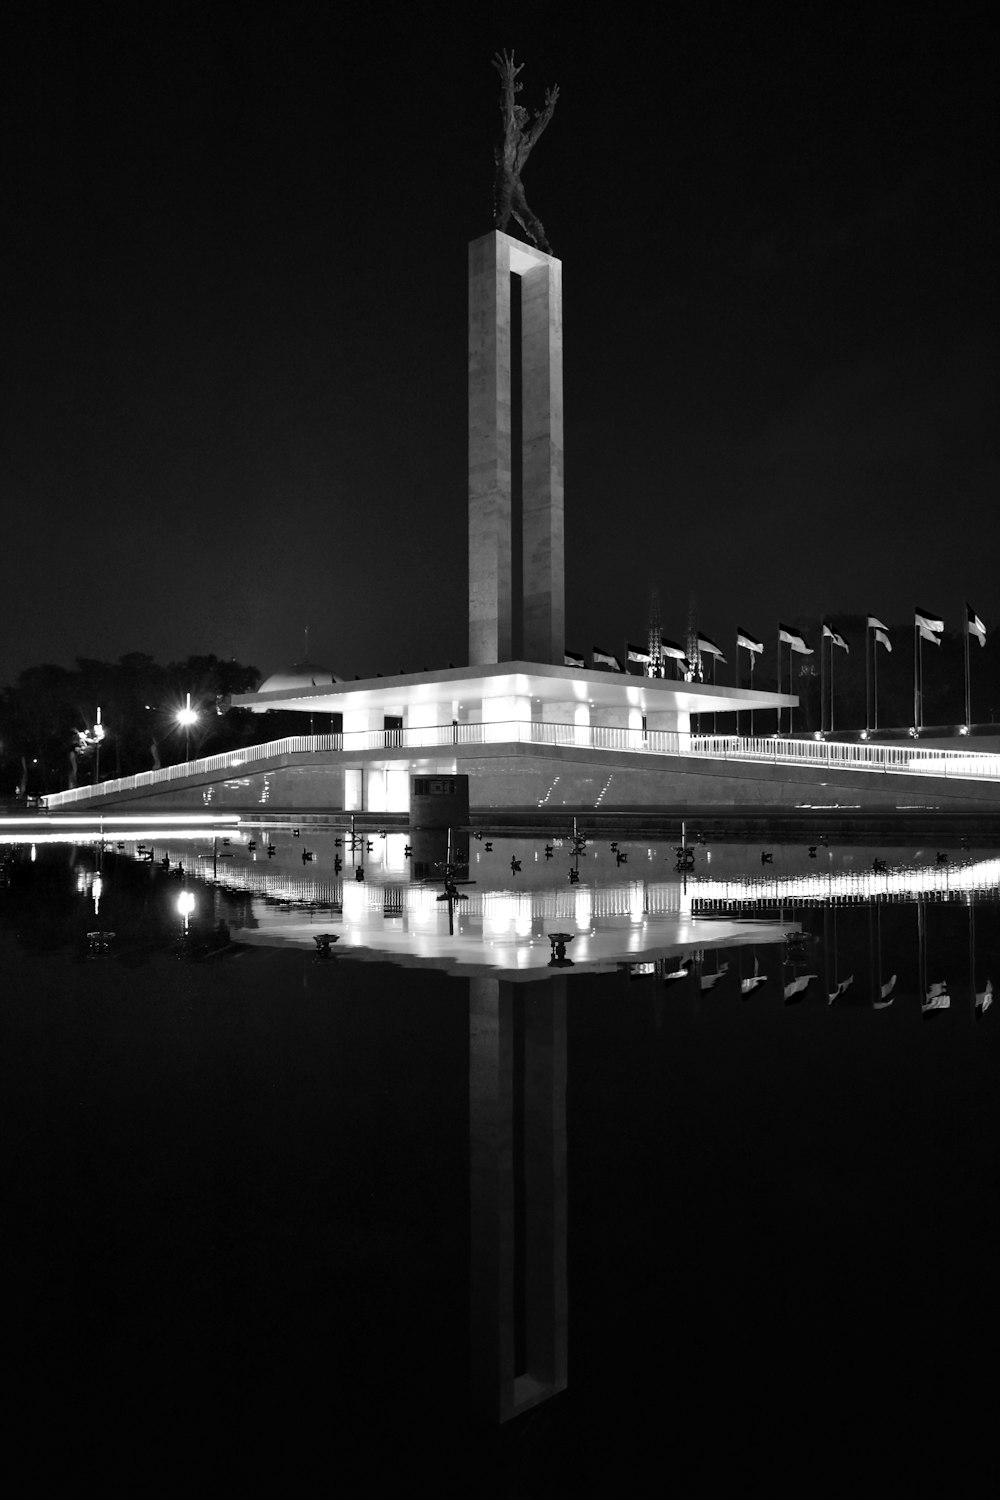 gray concrete bridge during night time